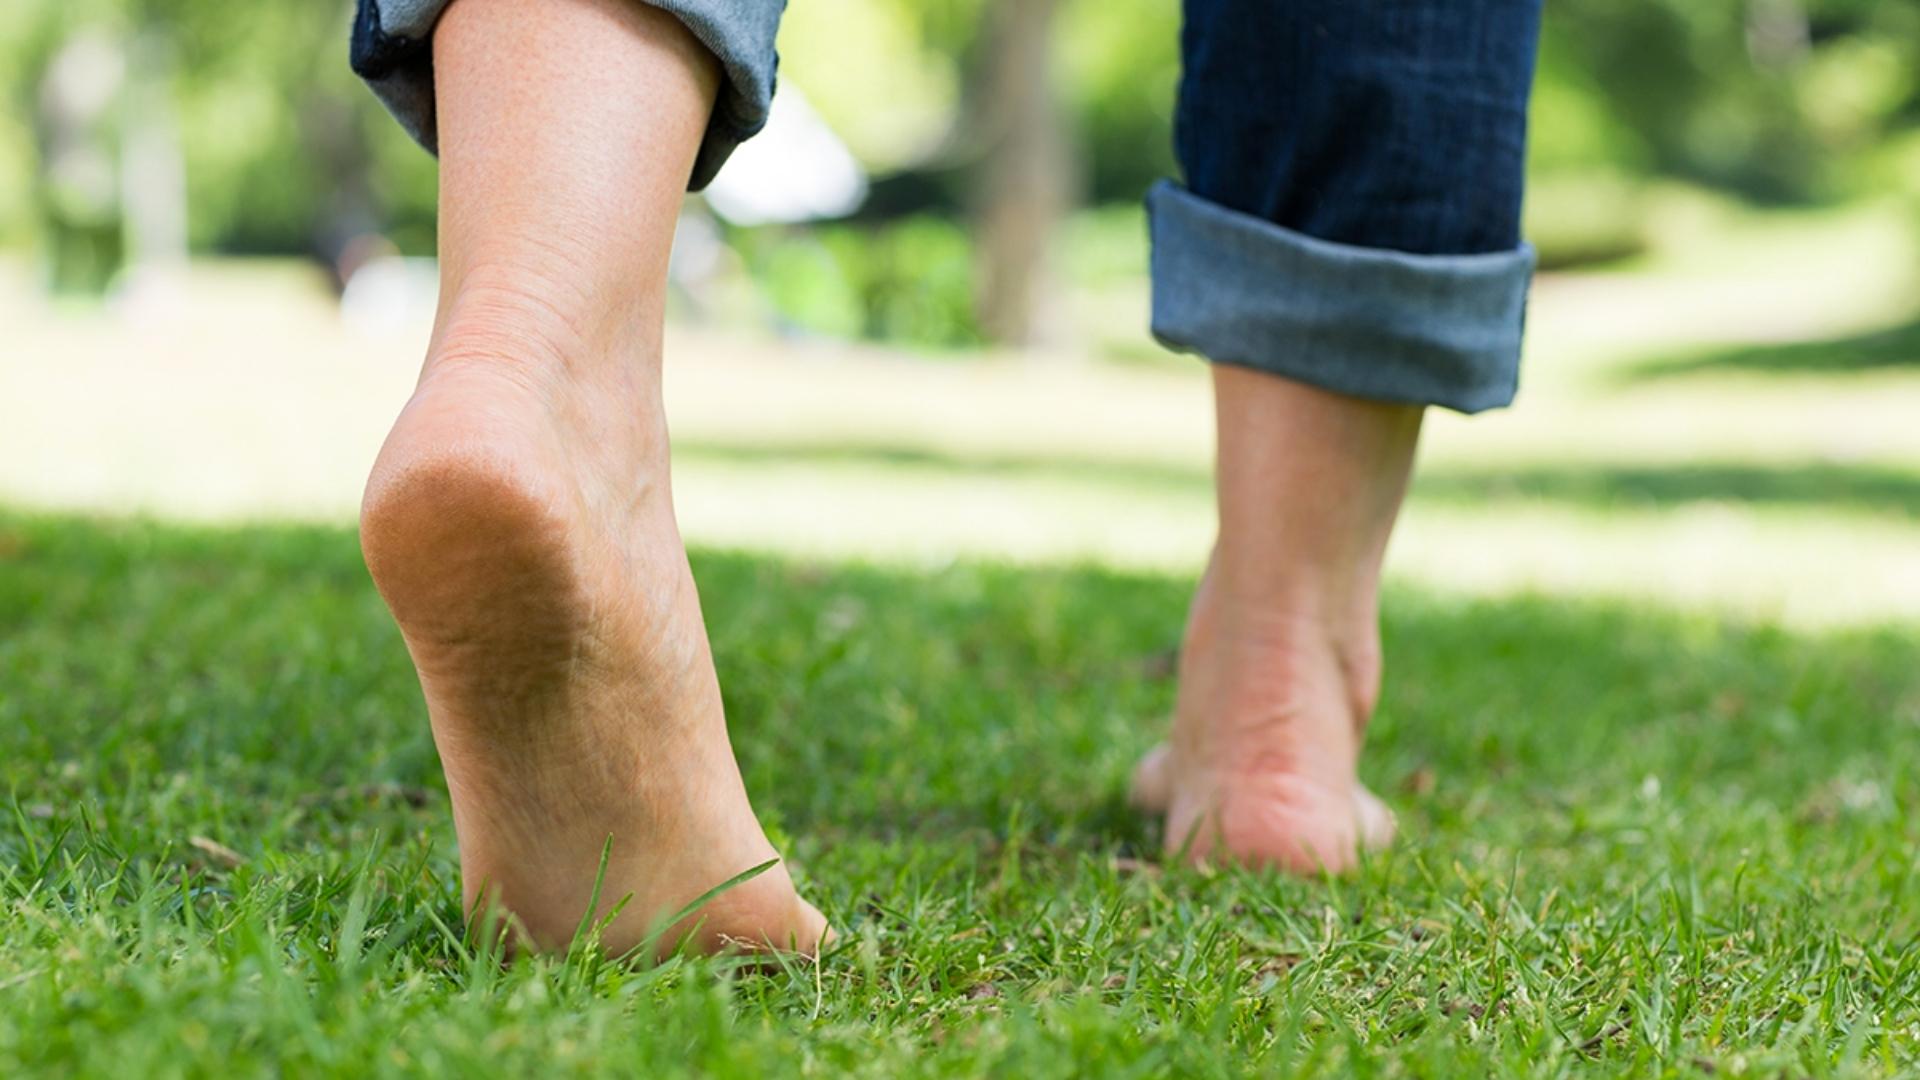 Walking barefoot on the ground, grounding